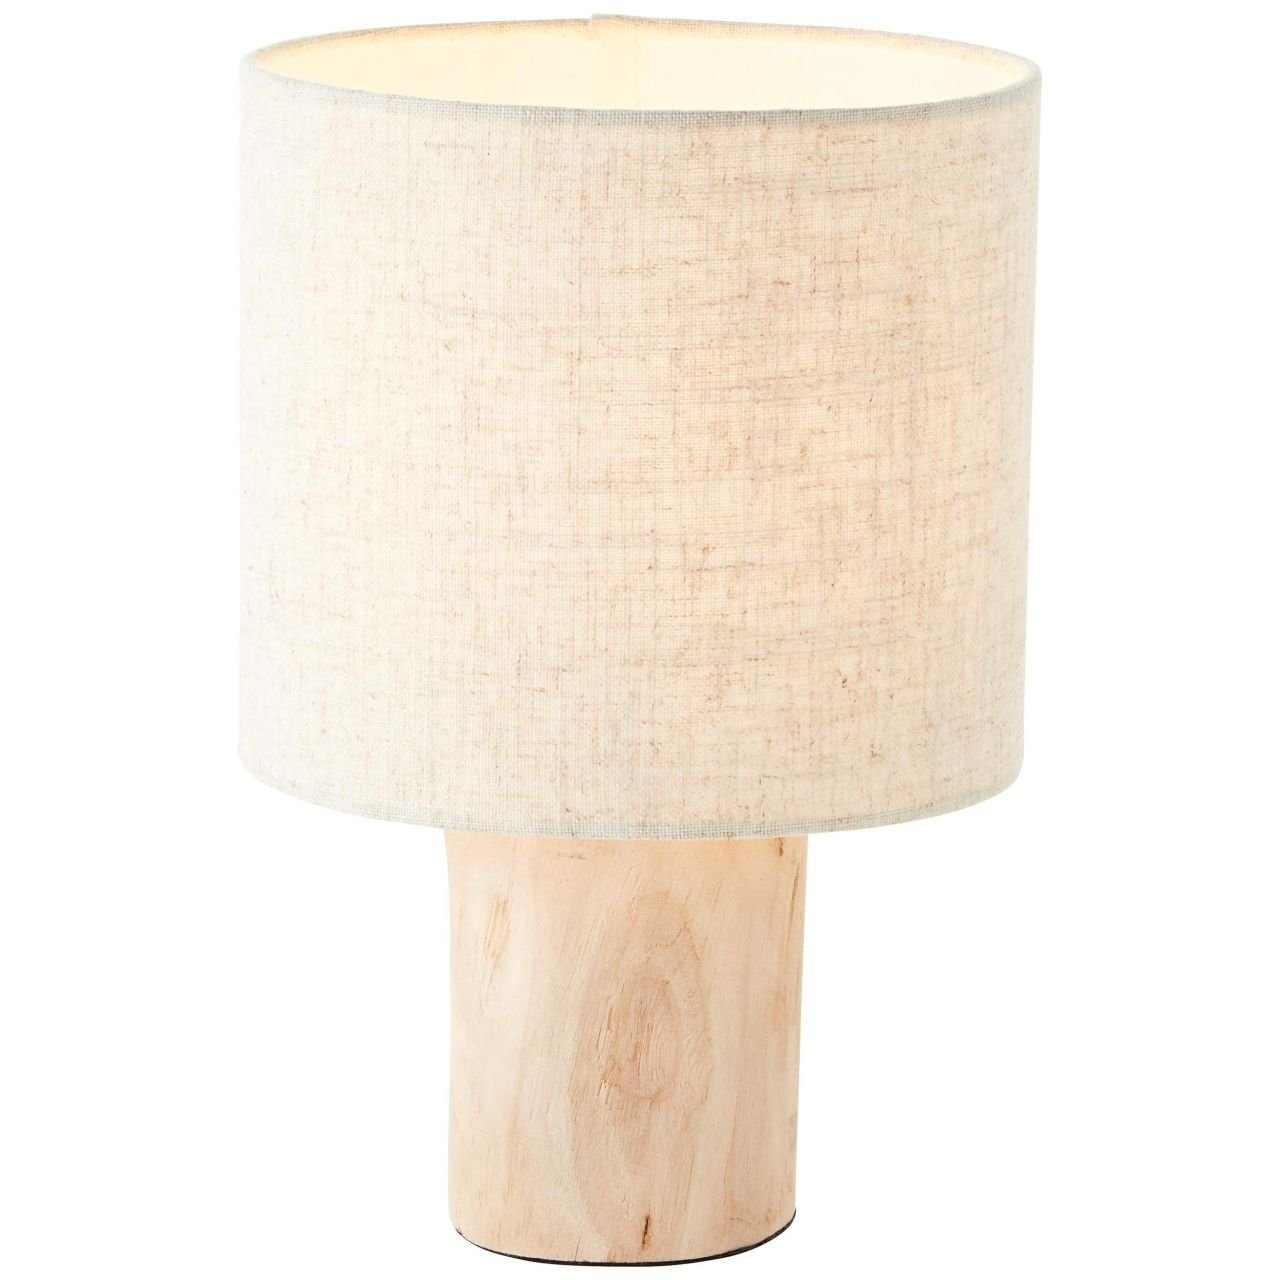 Holz natur, 40W, Pia, Tischleuchte Tischleuchte nachhaltiger Brilliant Pia aus Lampe, A60, 1x E27,